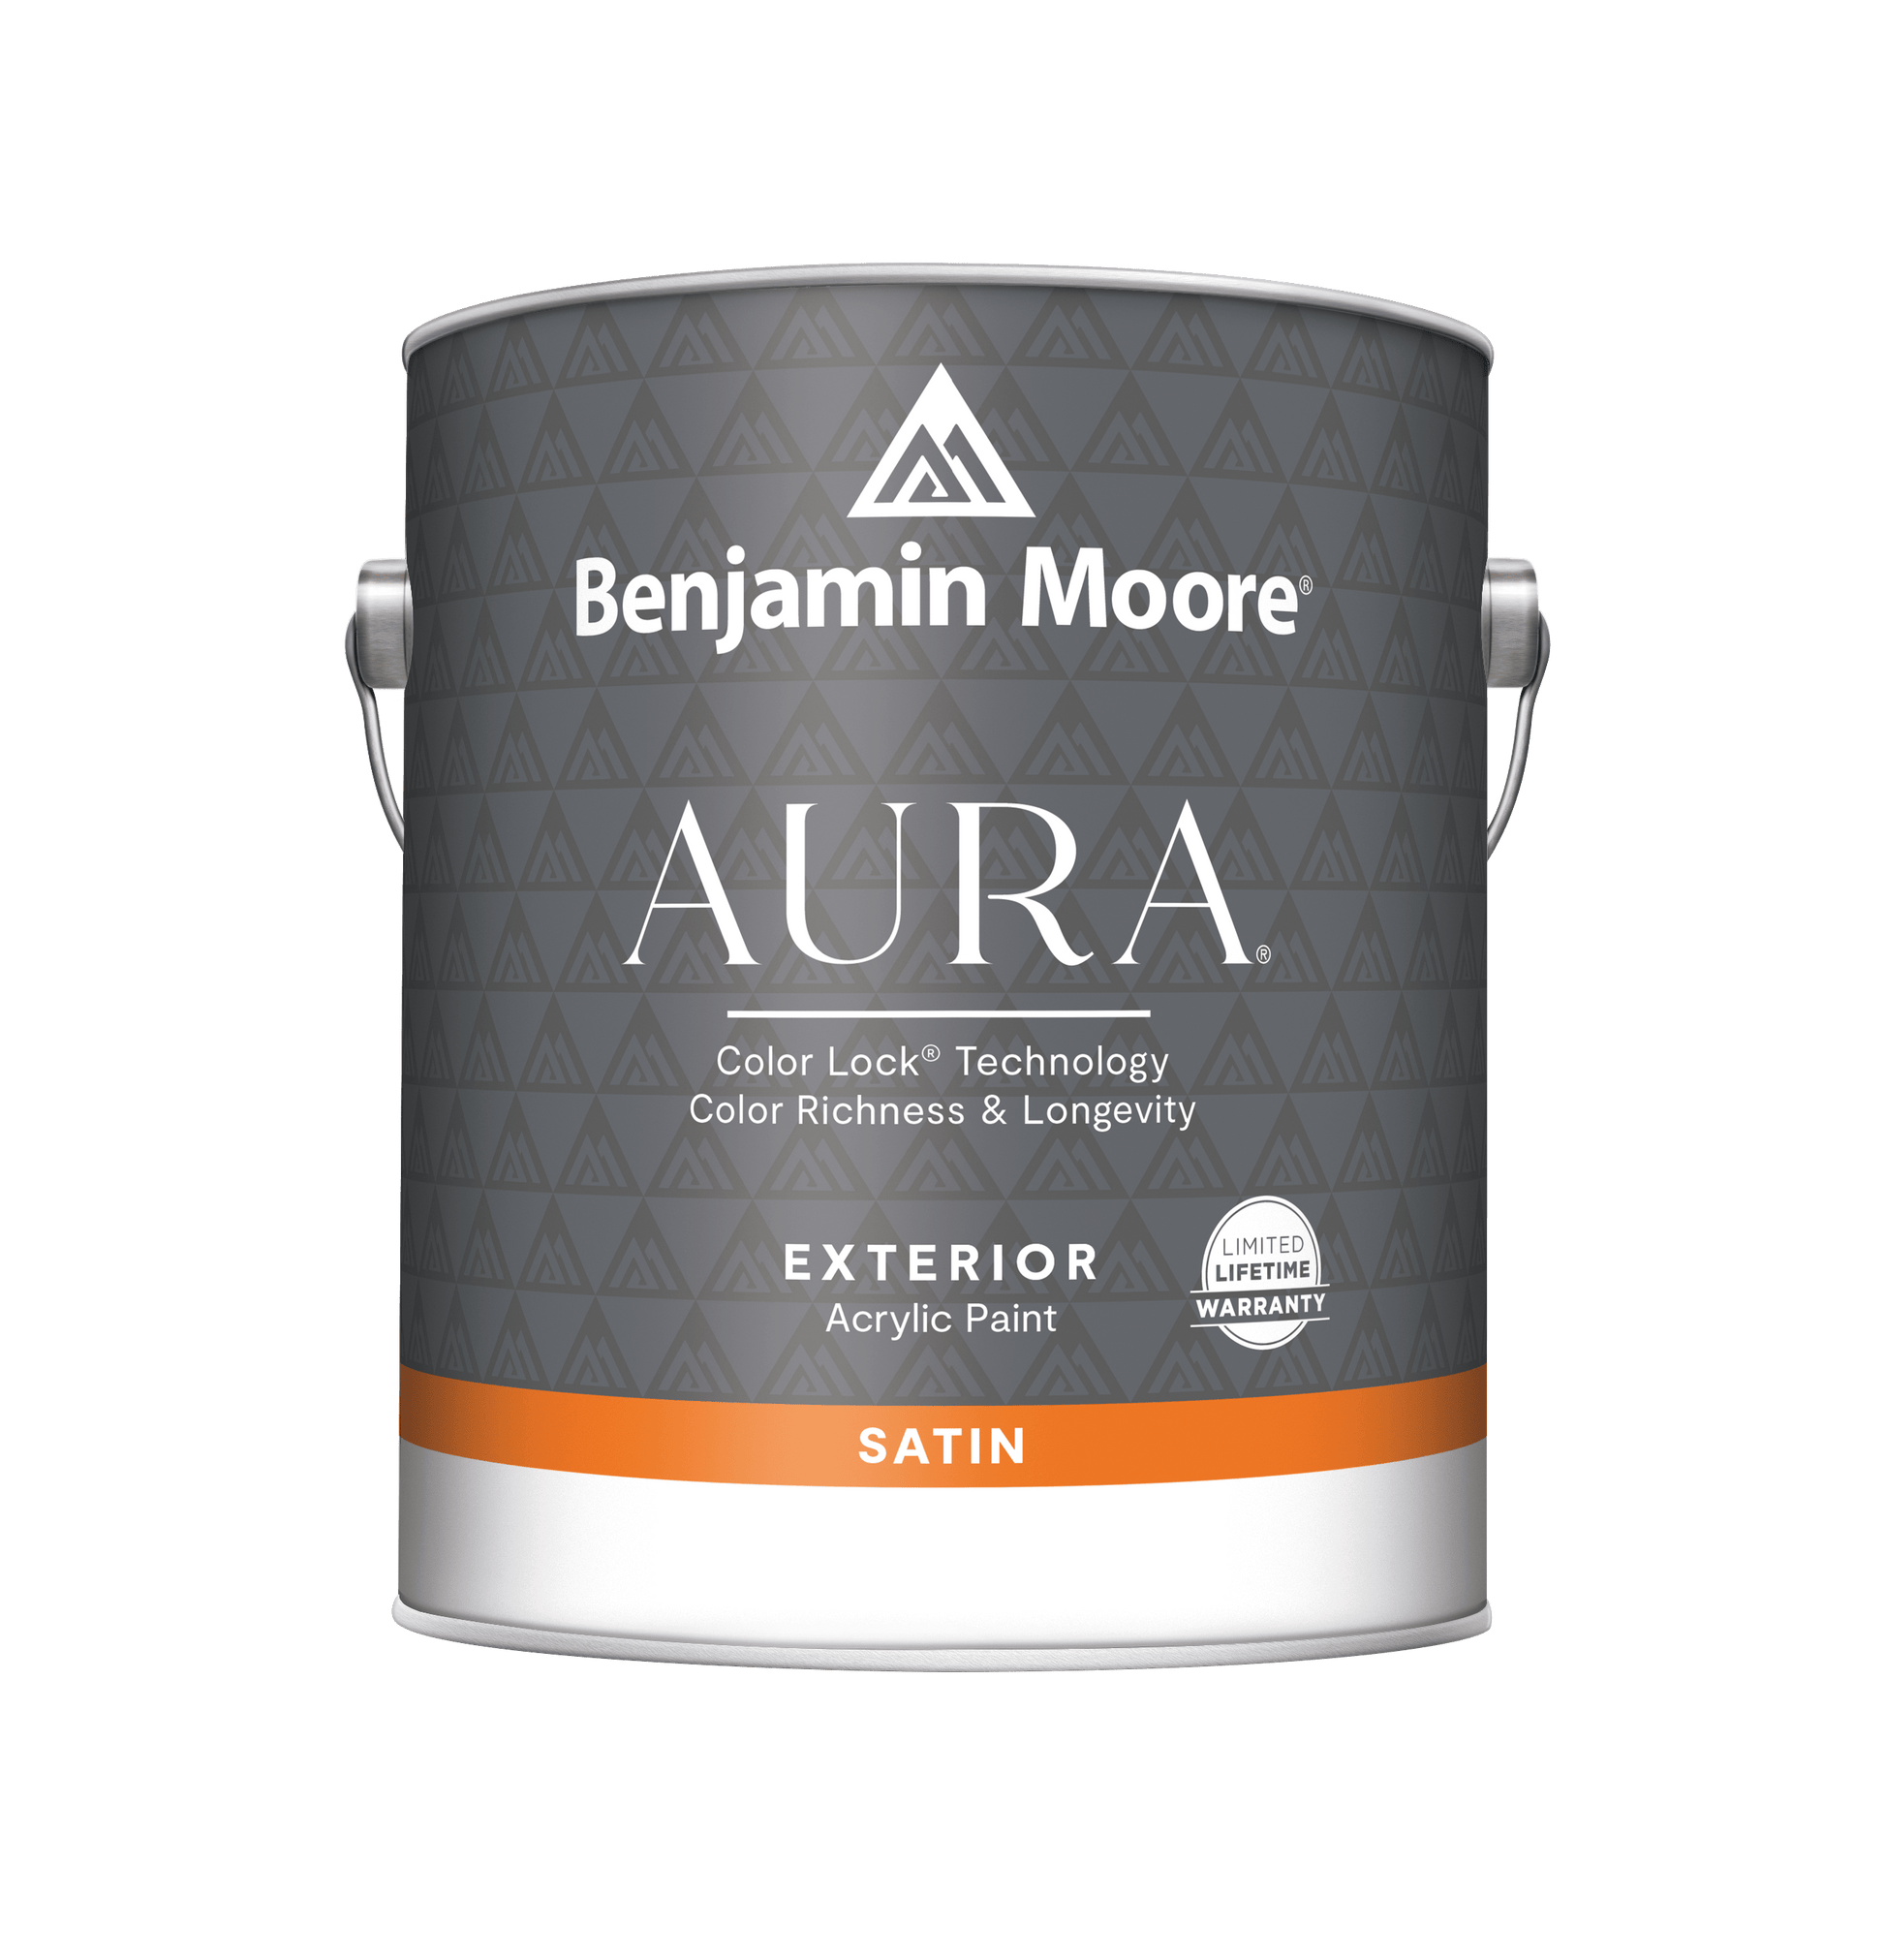 Benjamin Moore Aura - Rossi Paint Stores - Satin - Gallon